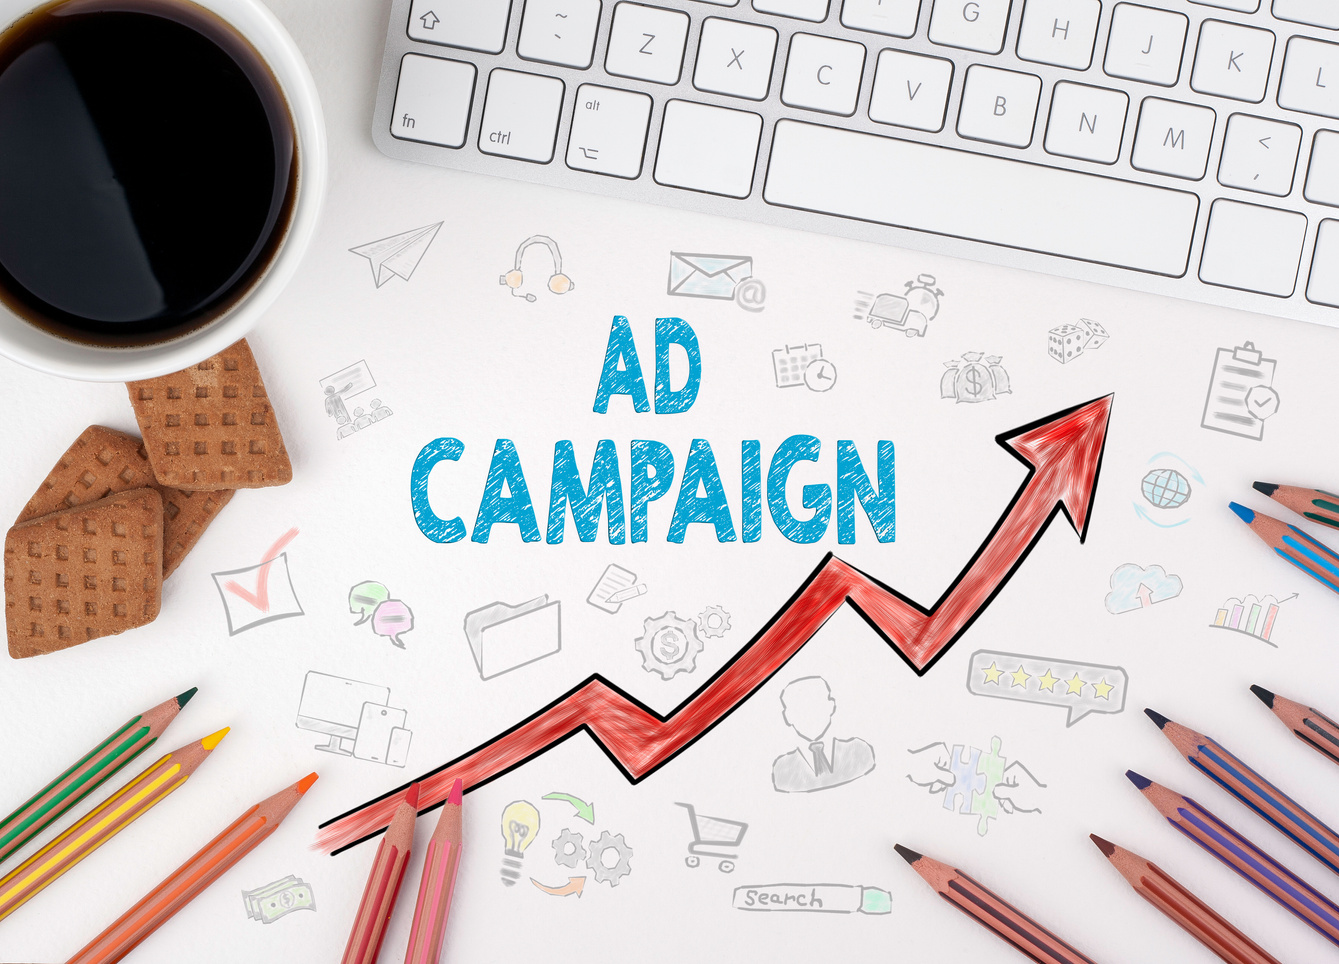 Ad Campaign, Business Concept. White office desk